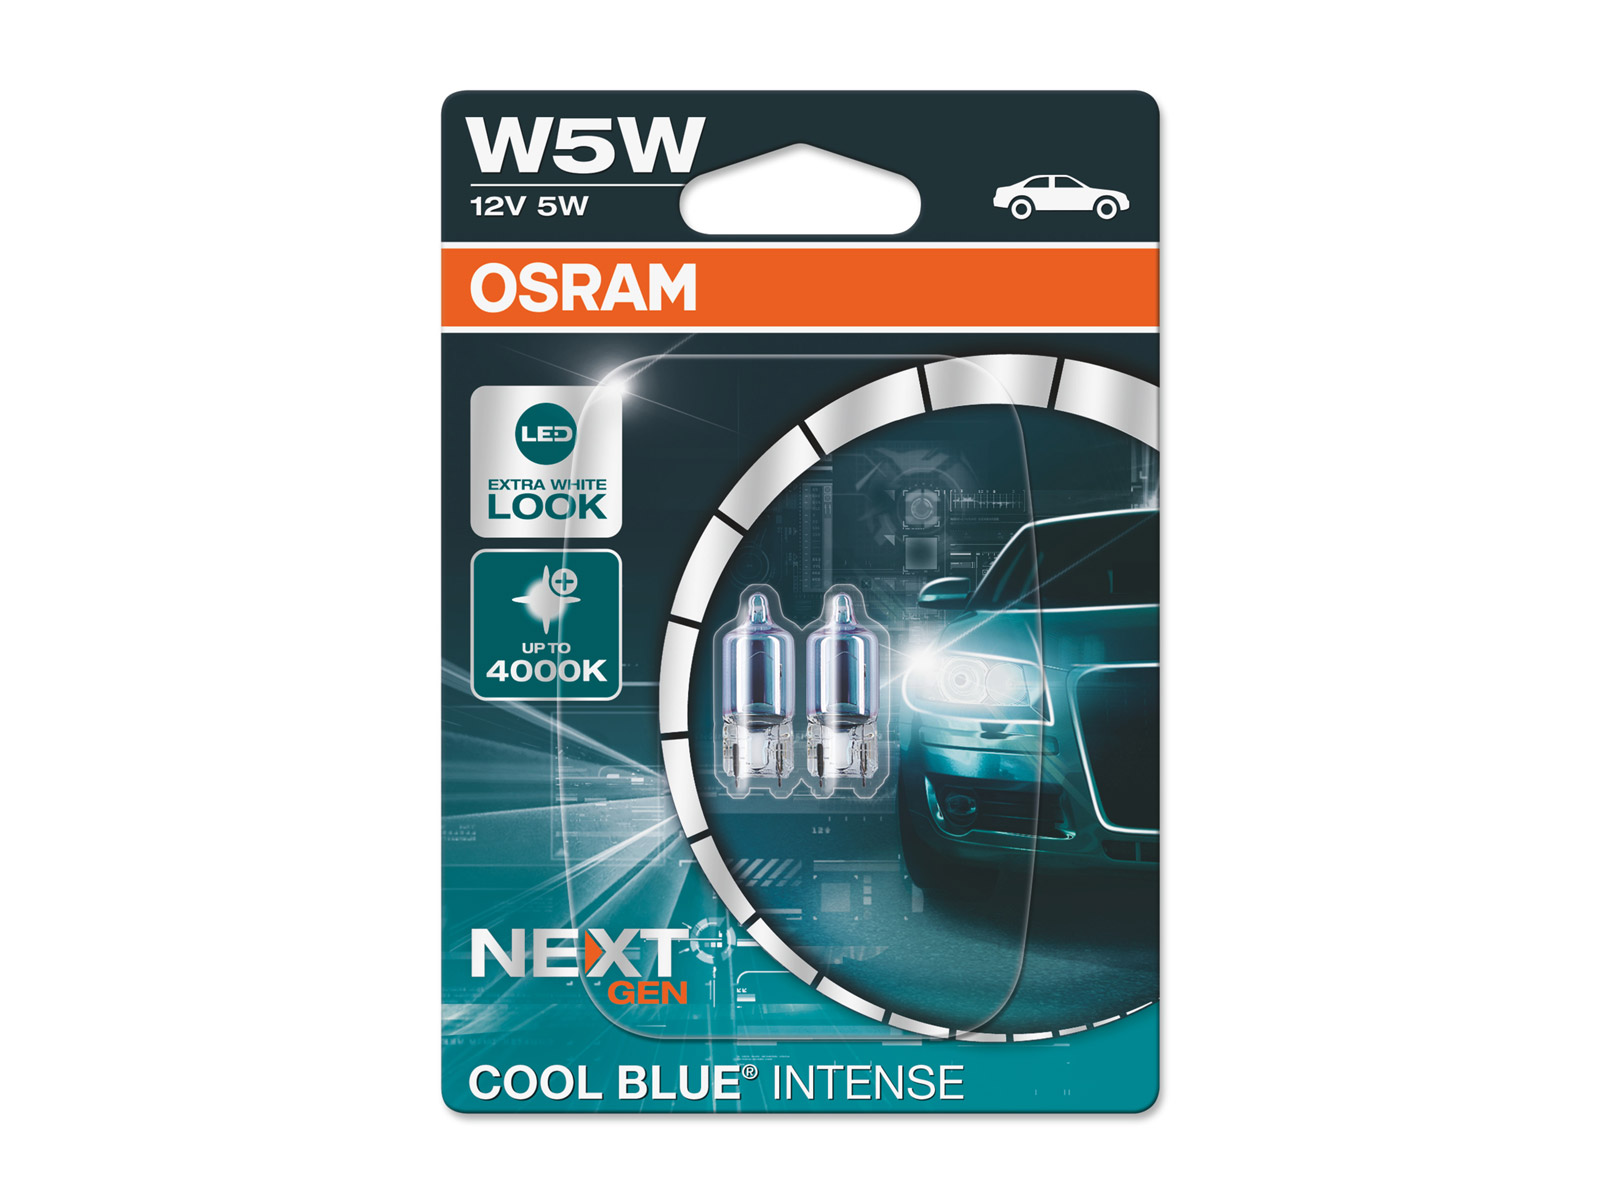 OSRAM W5W Cool Blue Intense NEXT GENERATION Halogen Duo Box